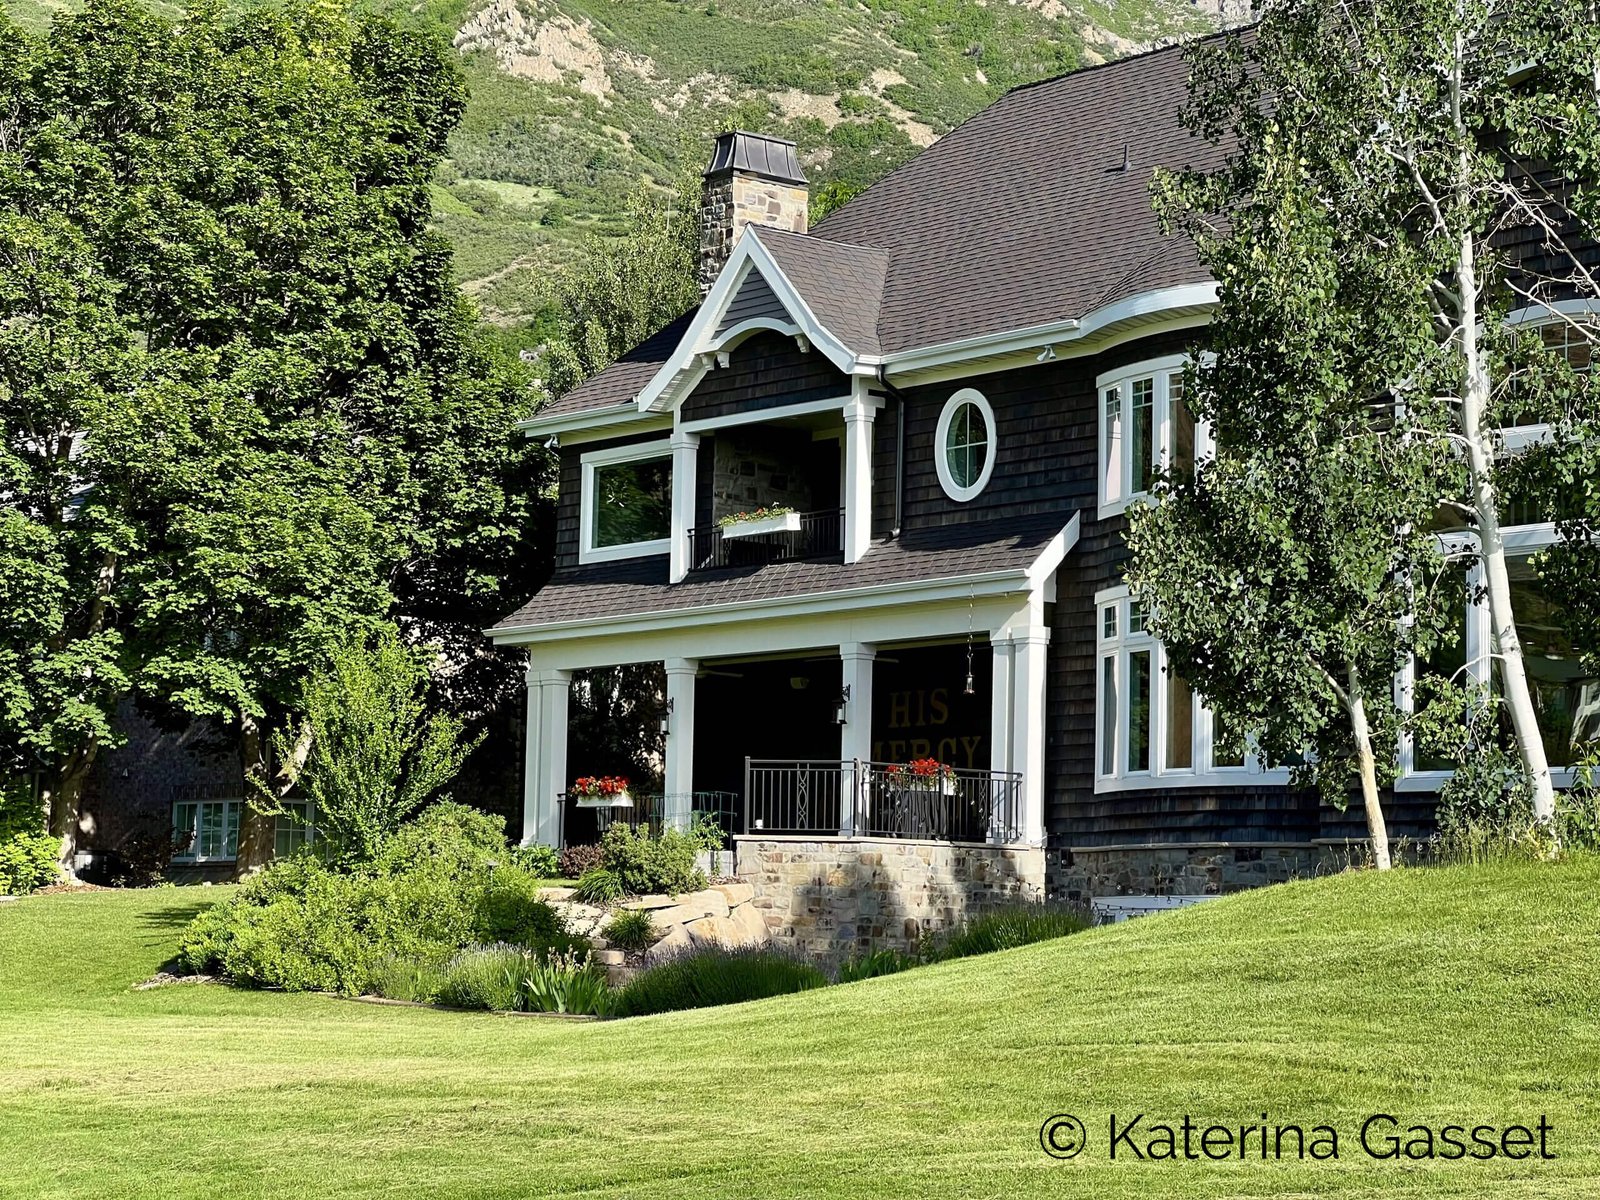 Gorgeous luxury home in Rock Canyon neighbourhood in Provo Utah